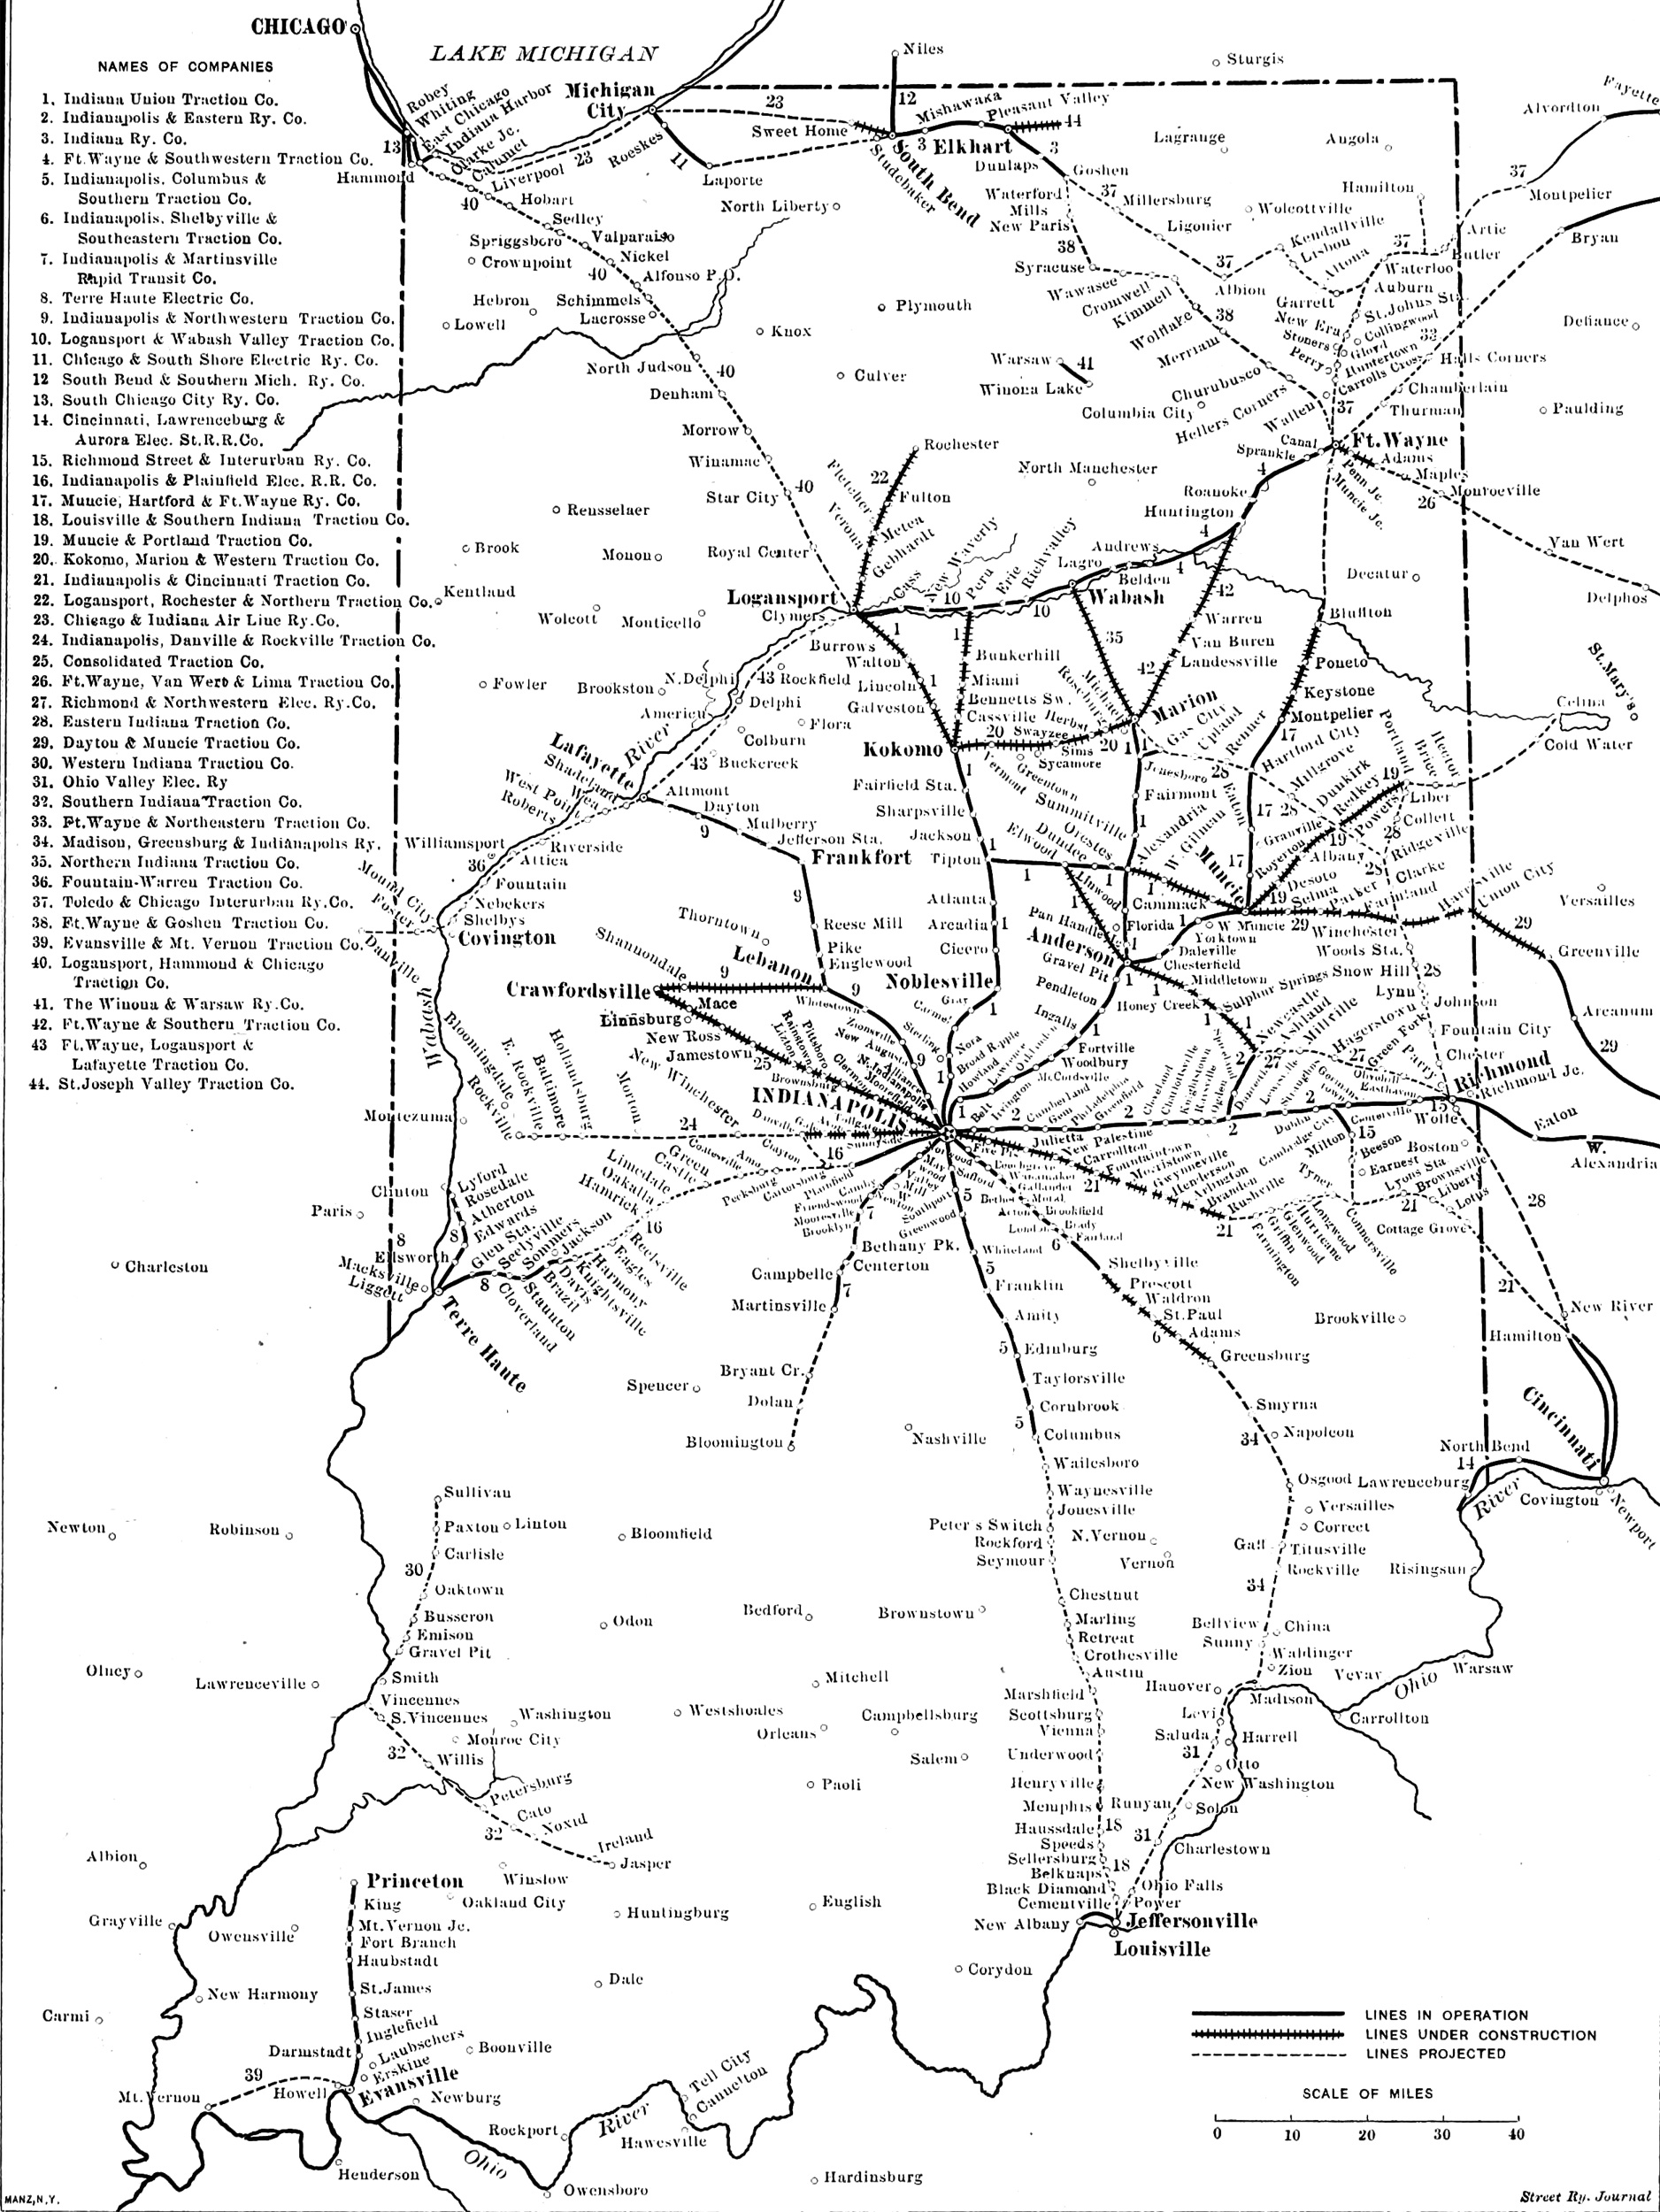 Louisville — Maps; Fort Wayne — Maps; Evansville — Maps; South Bend — Maps; Lafayette — Maps; Logansport — Maps; Cincinnati — Maps and Plans; Indianapolis — Maps and Plans; Terre Haute — Maps and Plans; Union Traction of Indiana — Maps and Plans; Michigan City — Maps and Plans